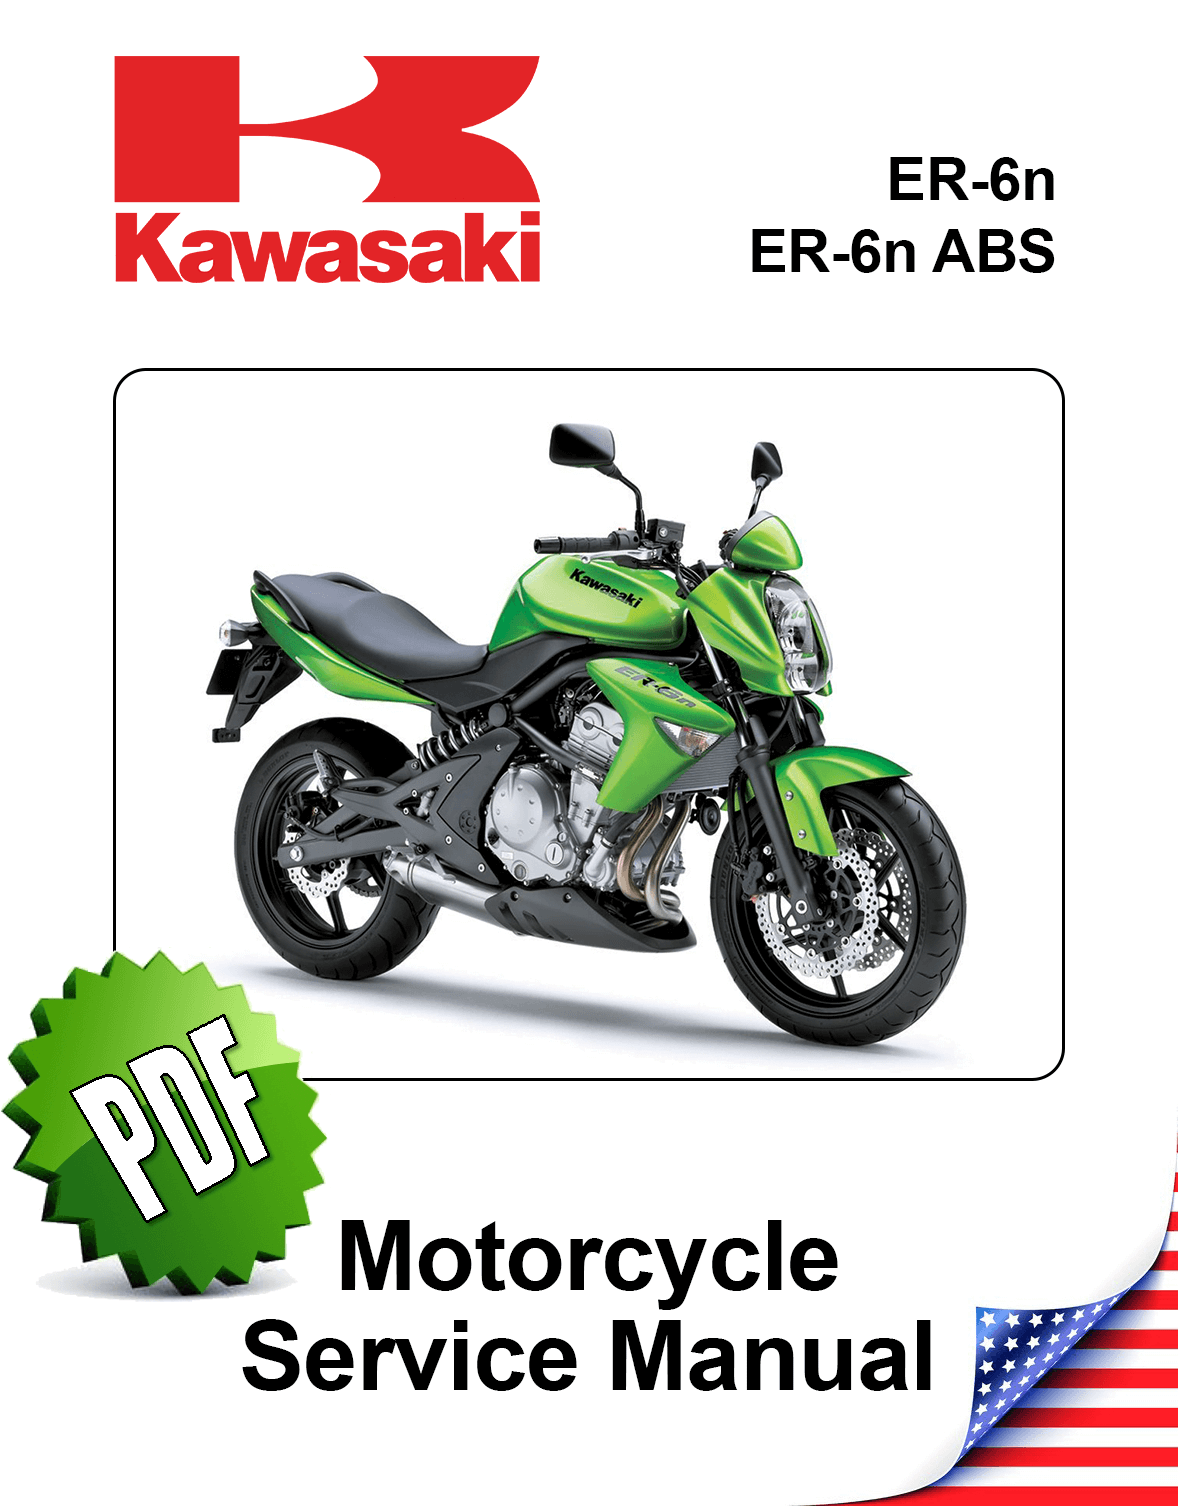 Kawasaki ER-6n models 2012 to 2015 original motorcycle manufacturer's PDF repair manual download